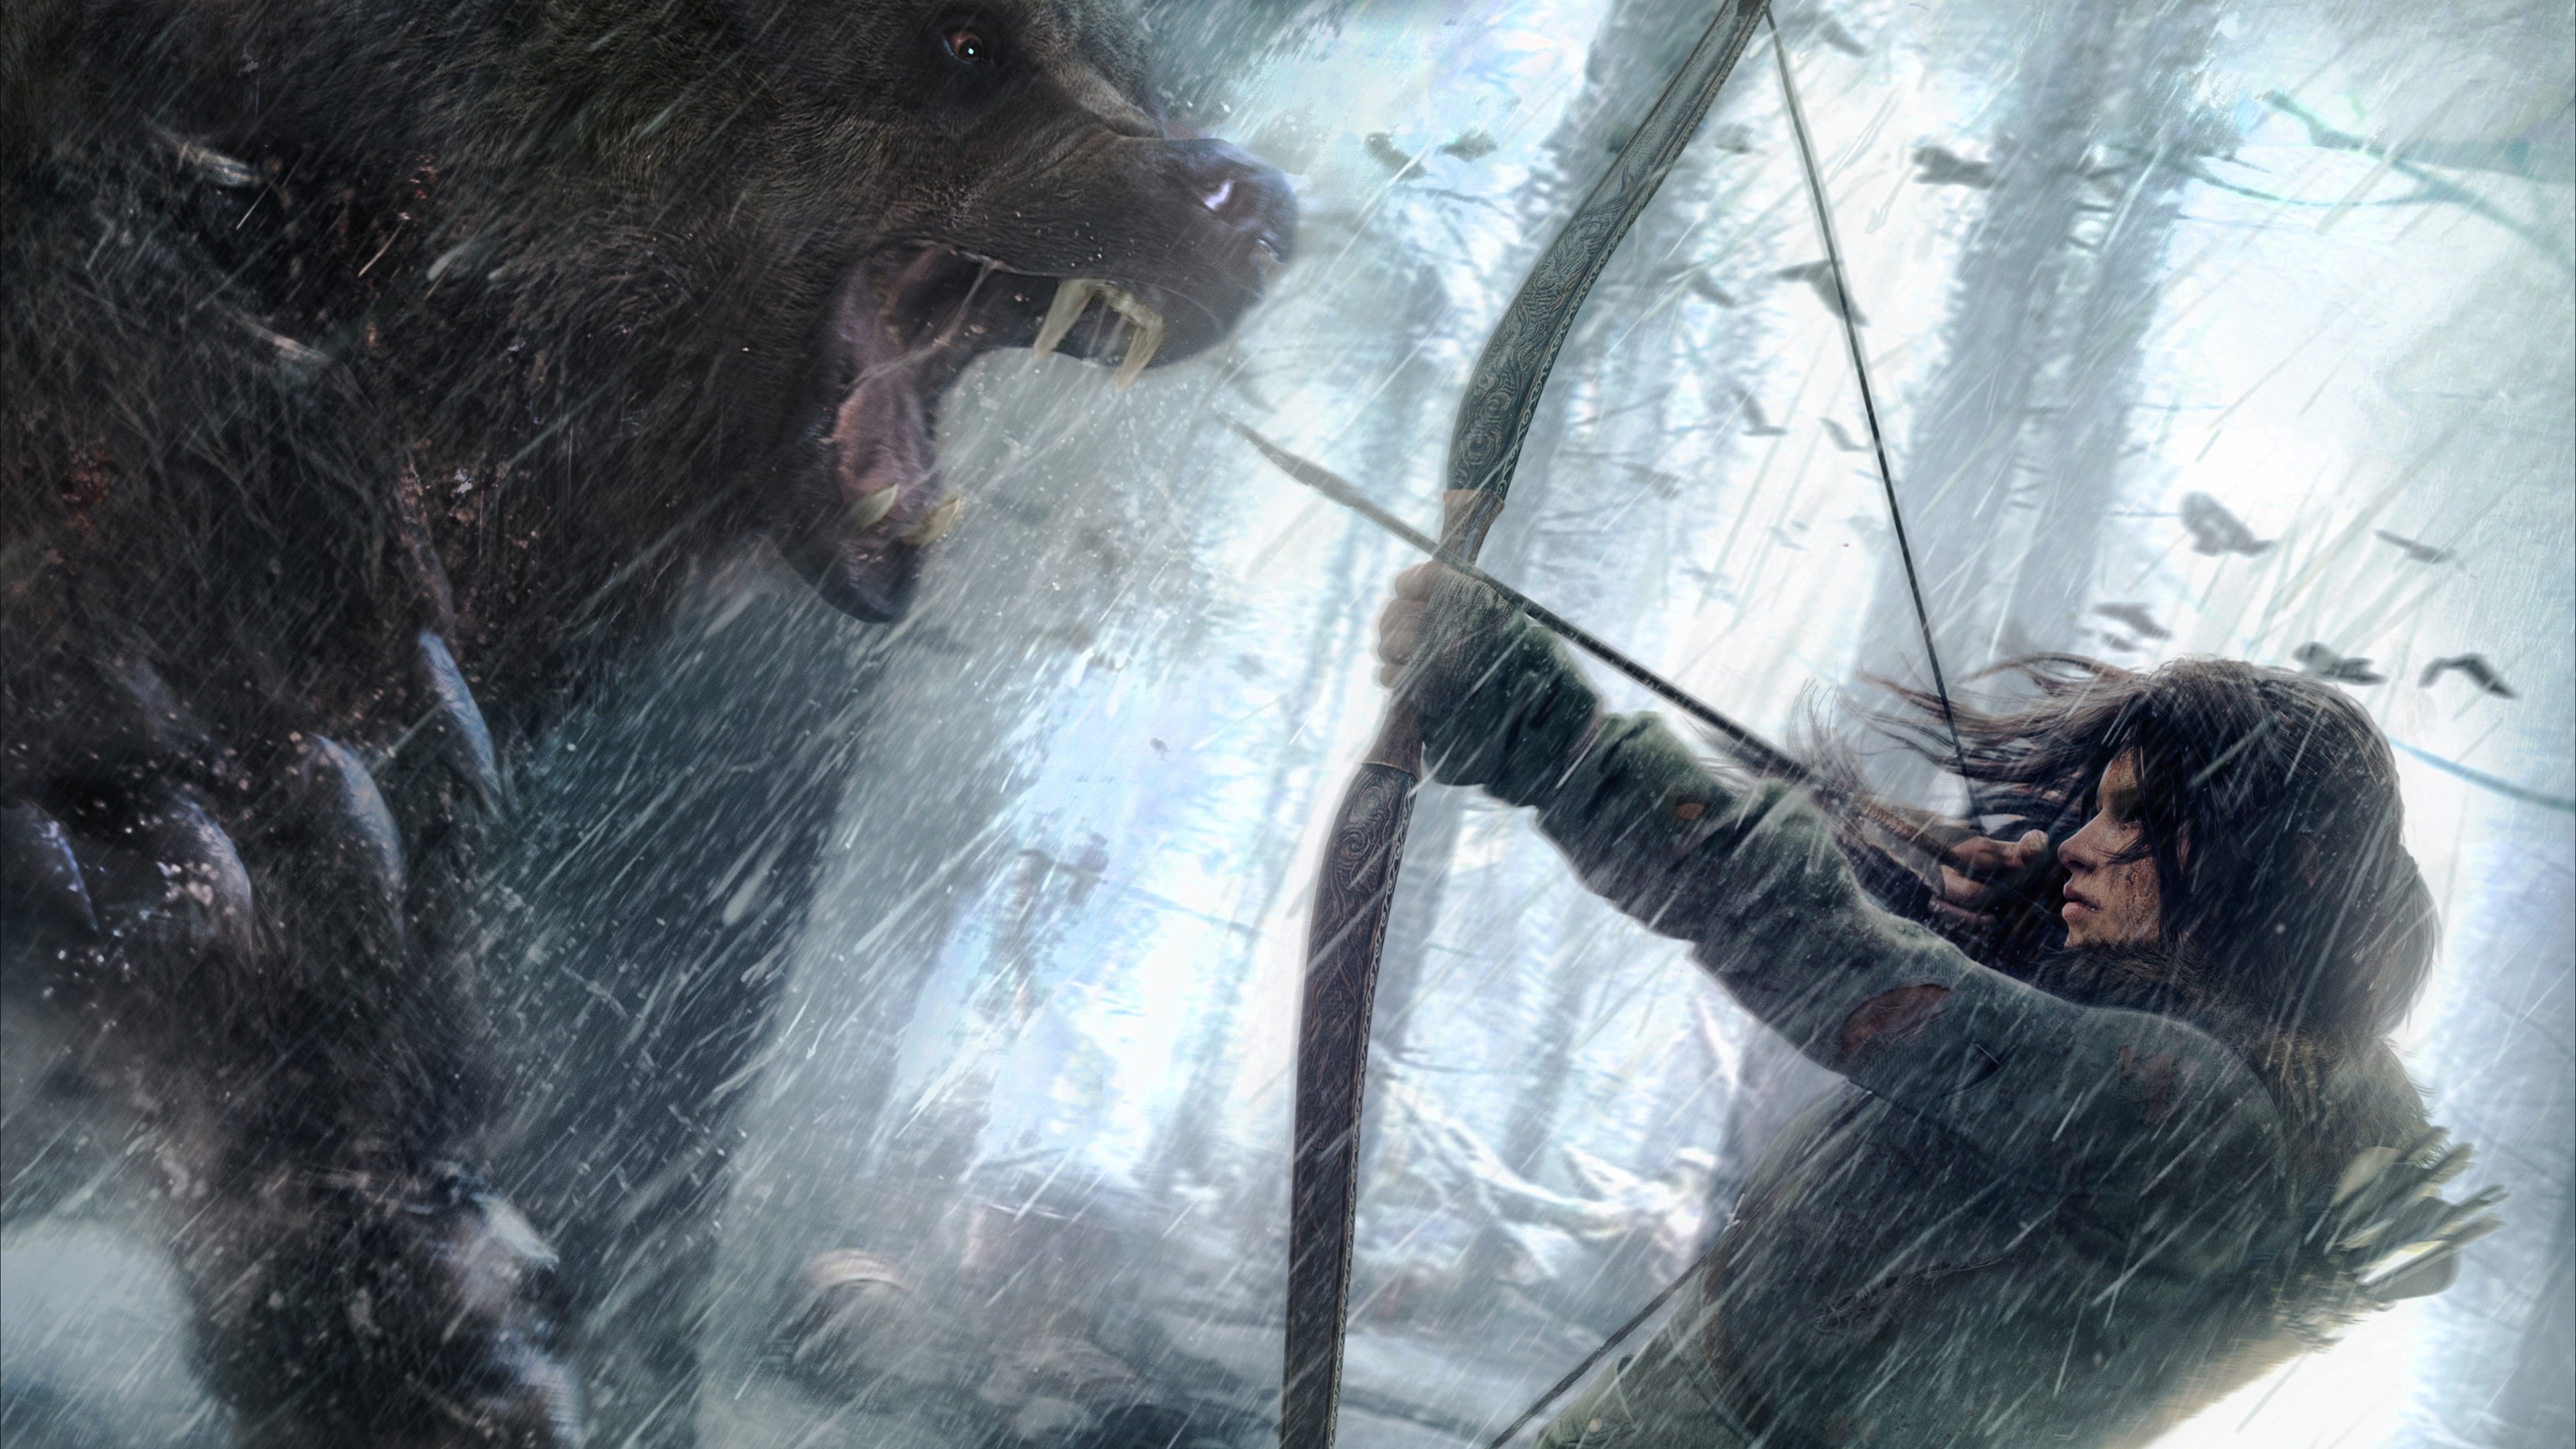 Rise of the Tomb Raider Lara Croft Fighting Bear Art for 3840 x 2160 Ultra HD resolution